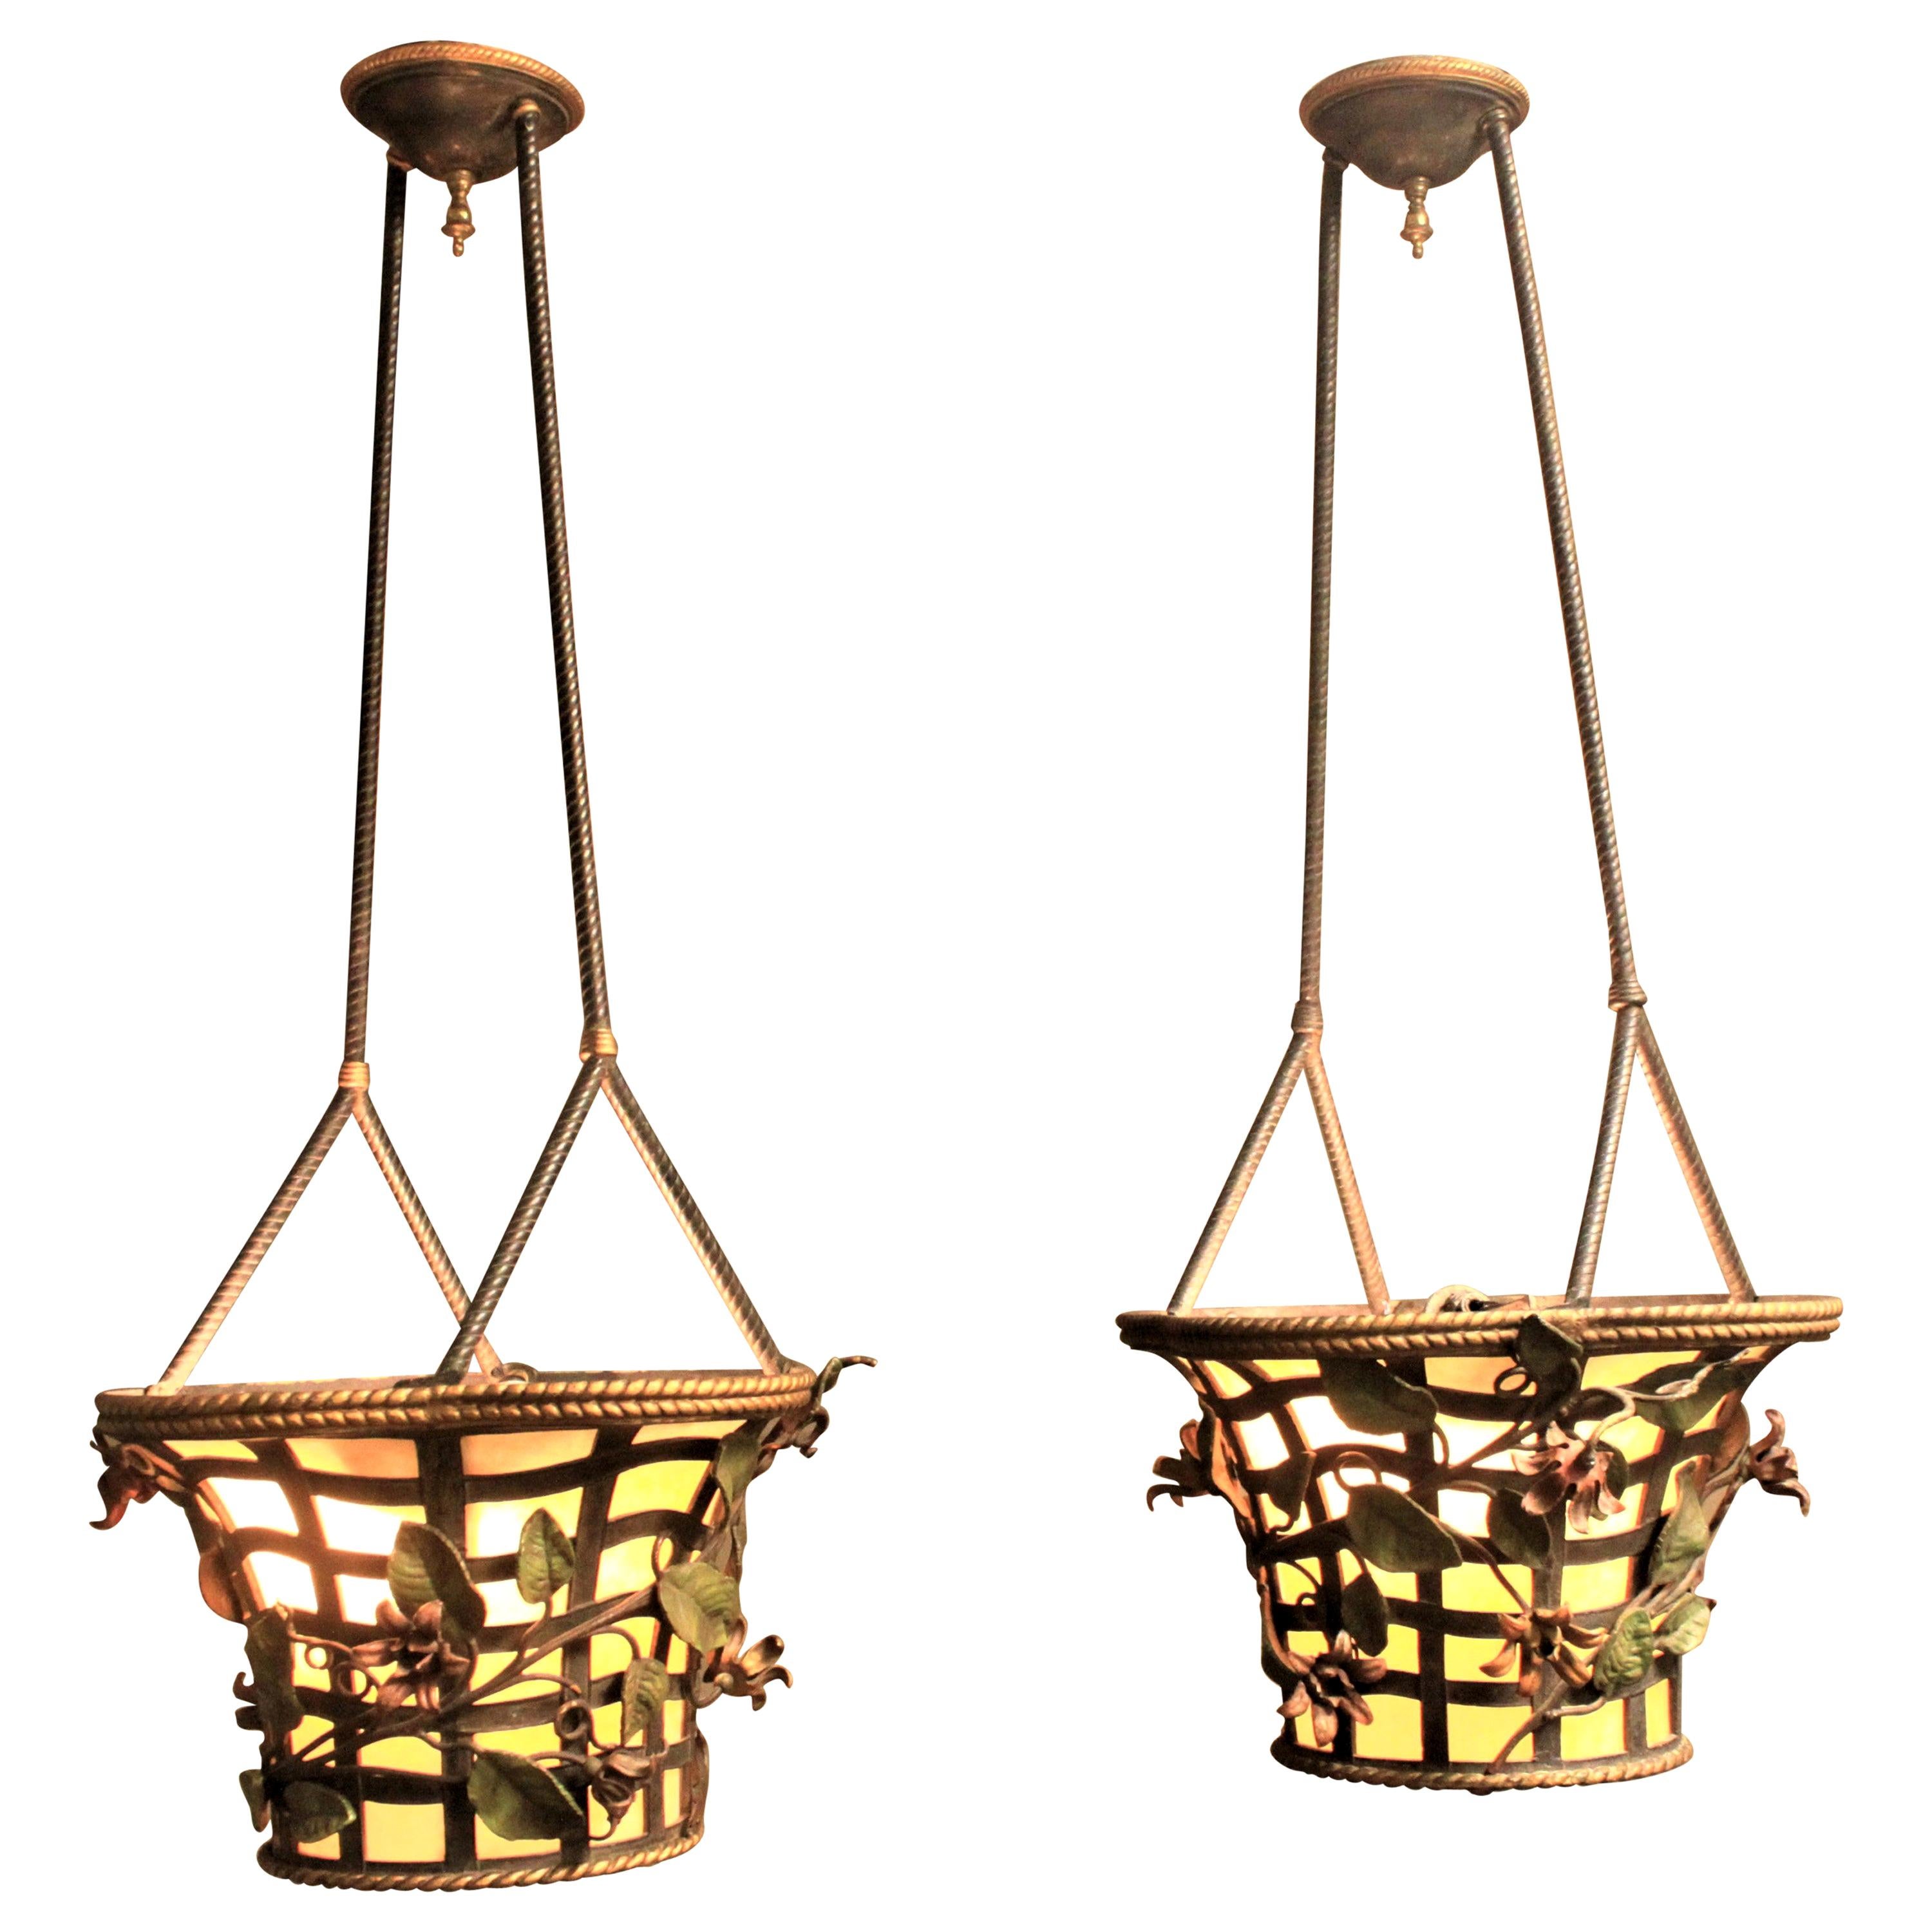 Pair of Antique Bronze Figural Hanging Flower Basket Ceiling Light Fixtures